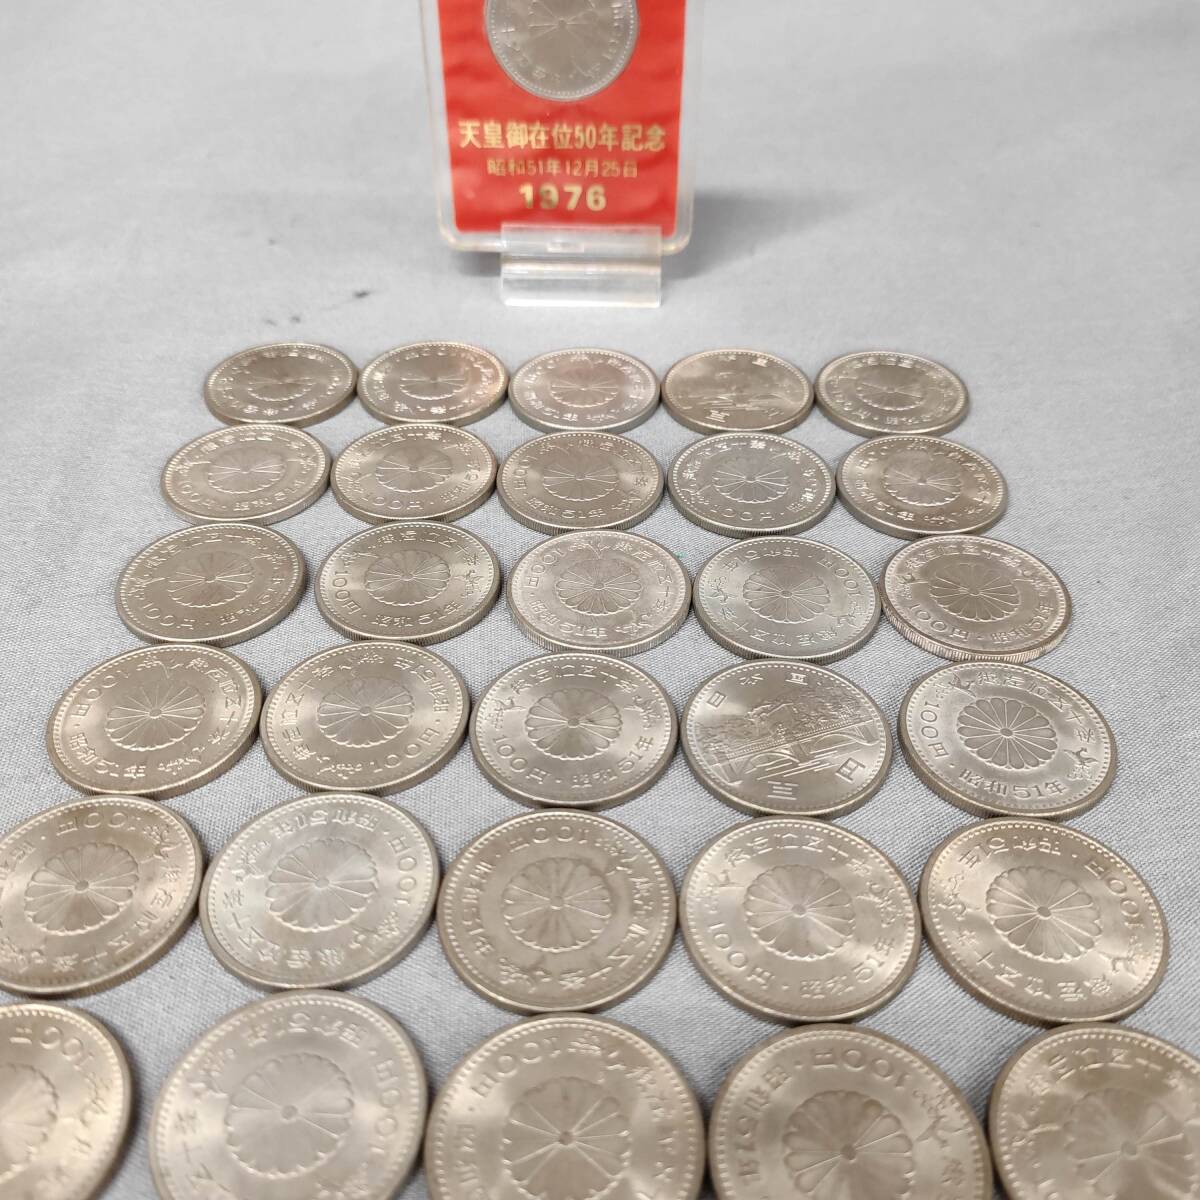 060329 ZG-01762 天皇御在位50年記念 100円硬貨 まとめ36枚 1976年 昭和51年 硬貨 貨幣 コレクション ホビー の画像3